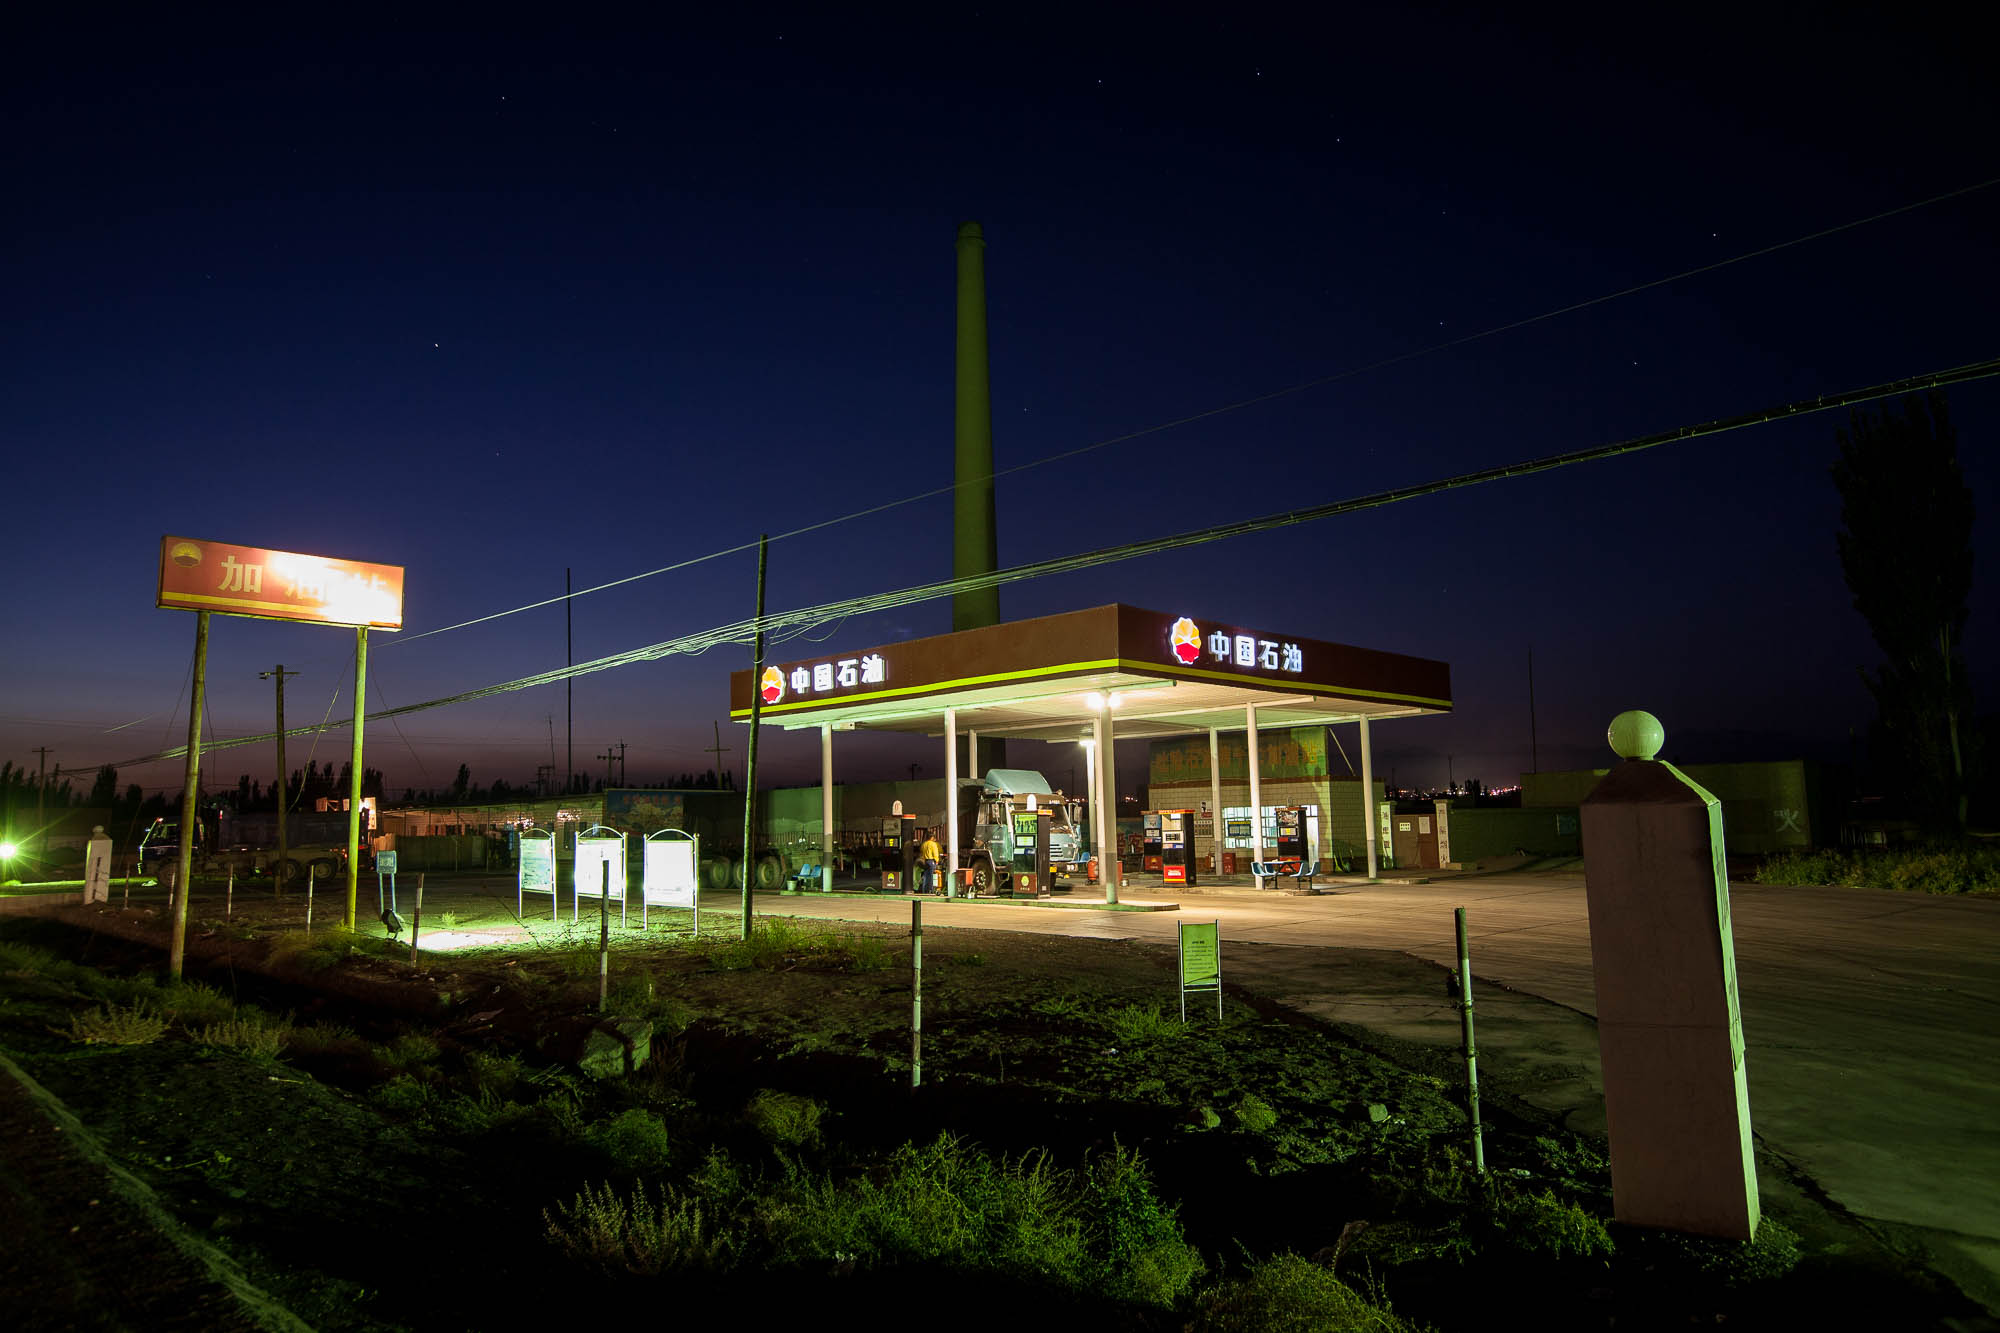 gas station